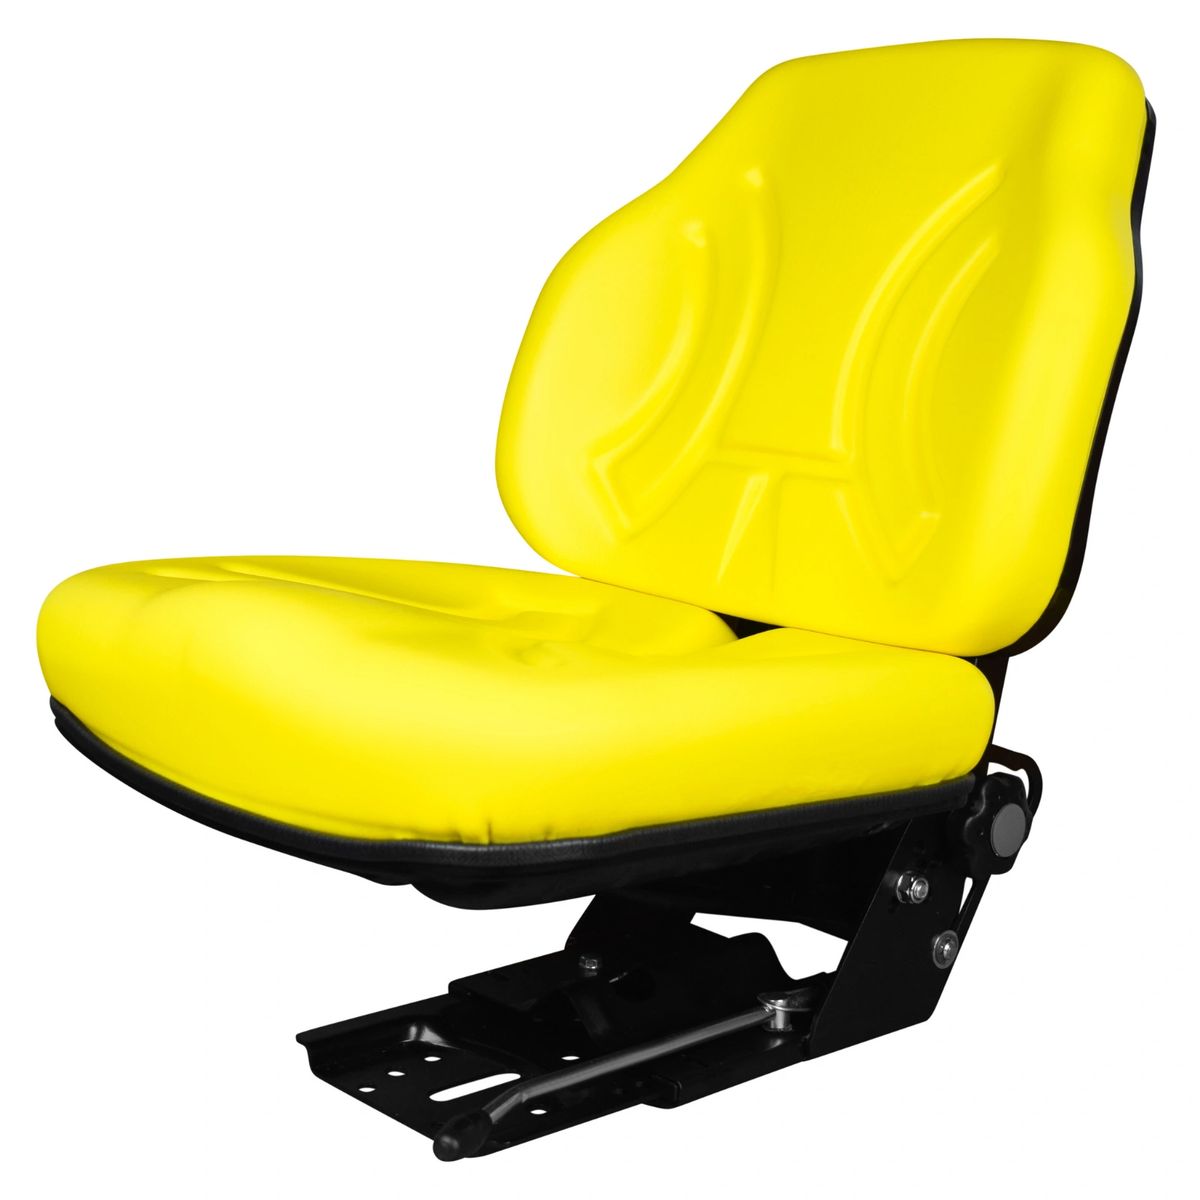 Trac Seats Yellow Ts 53 John Deere Tractor Seat 5103 5200 5203